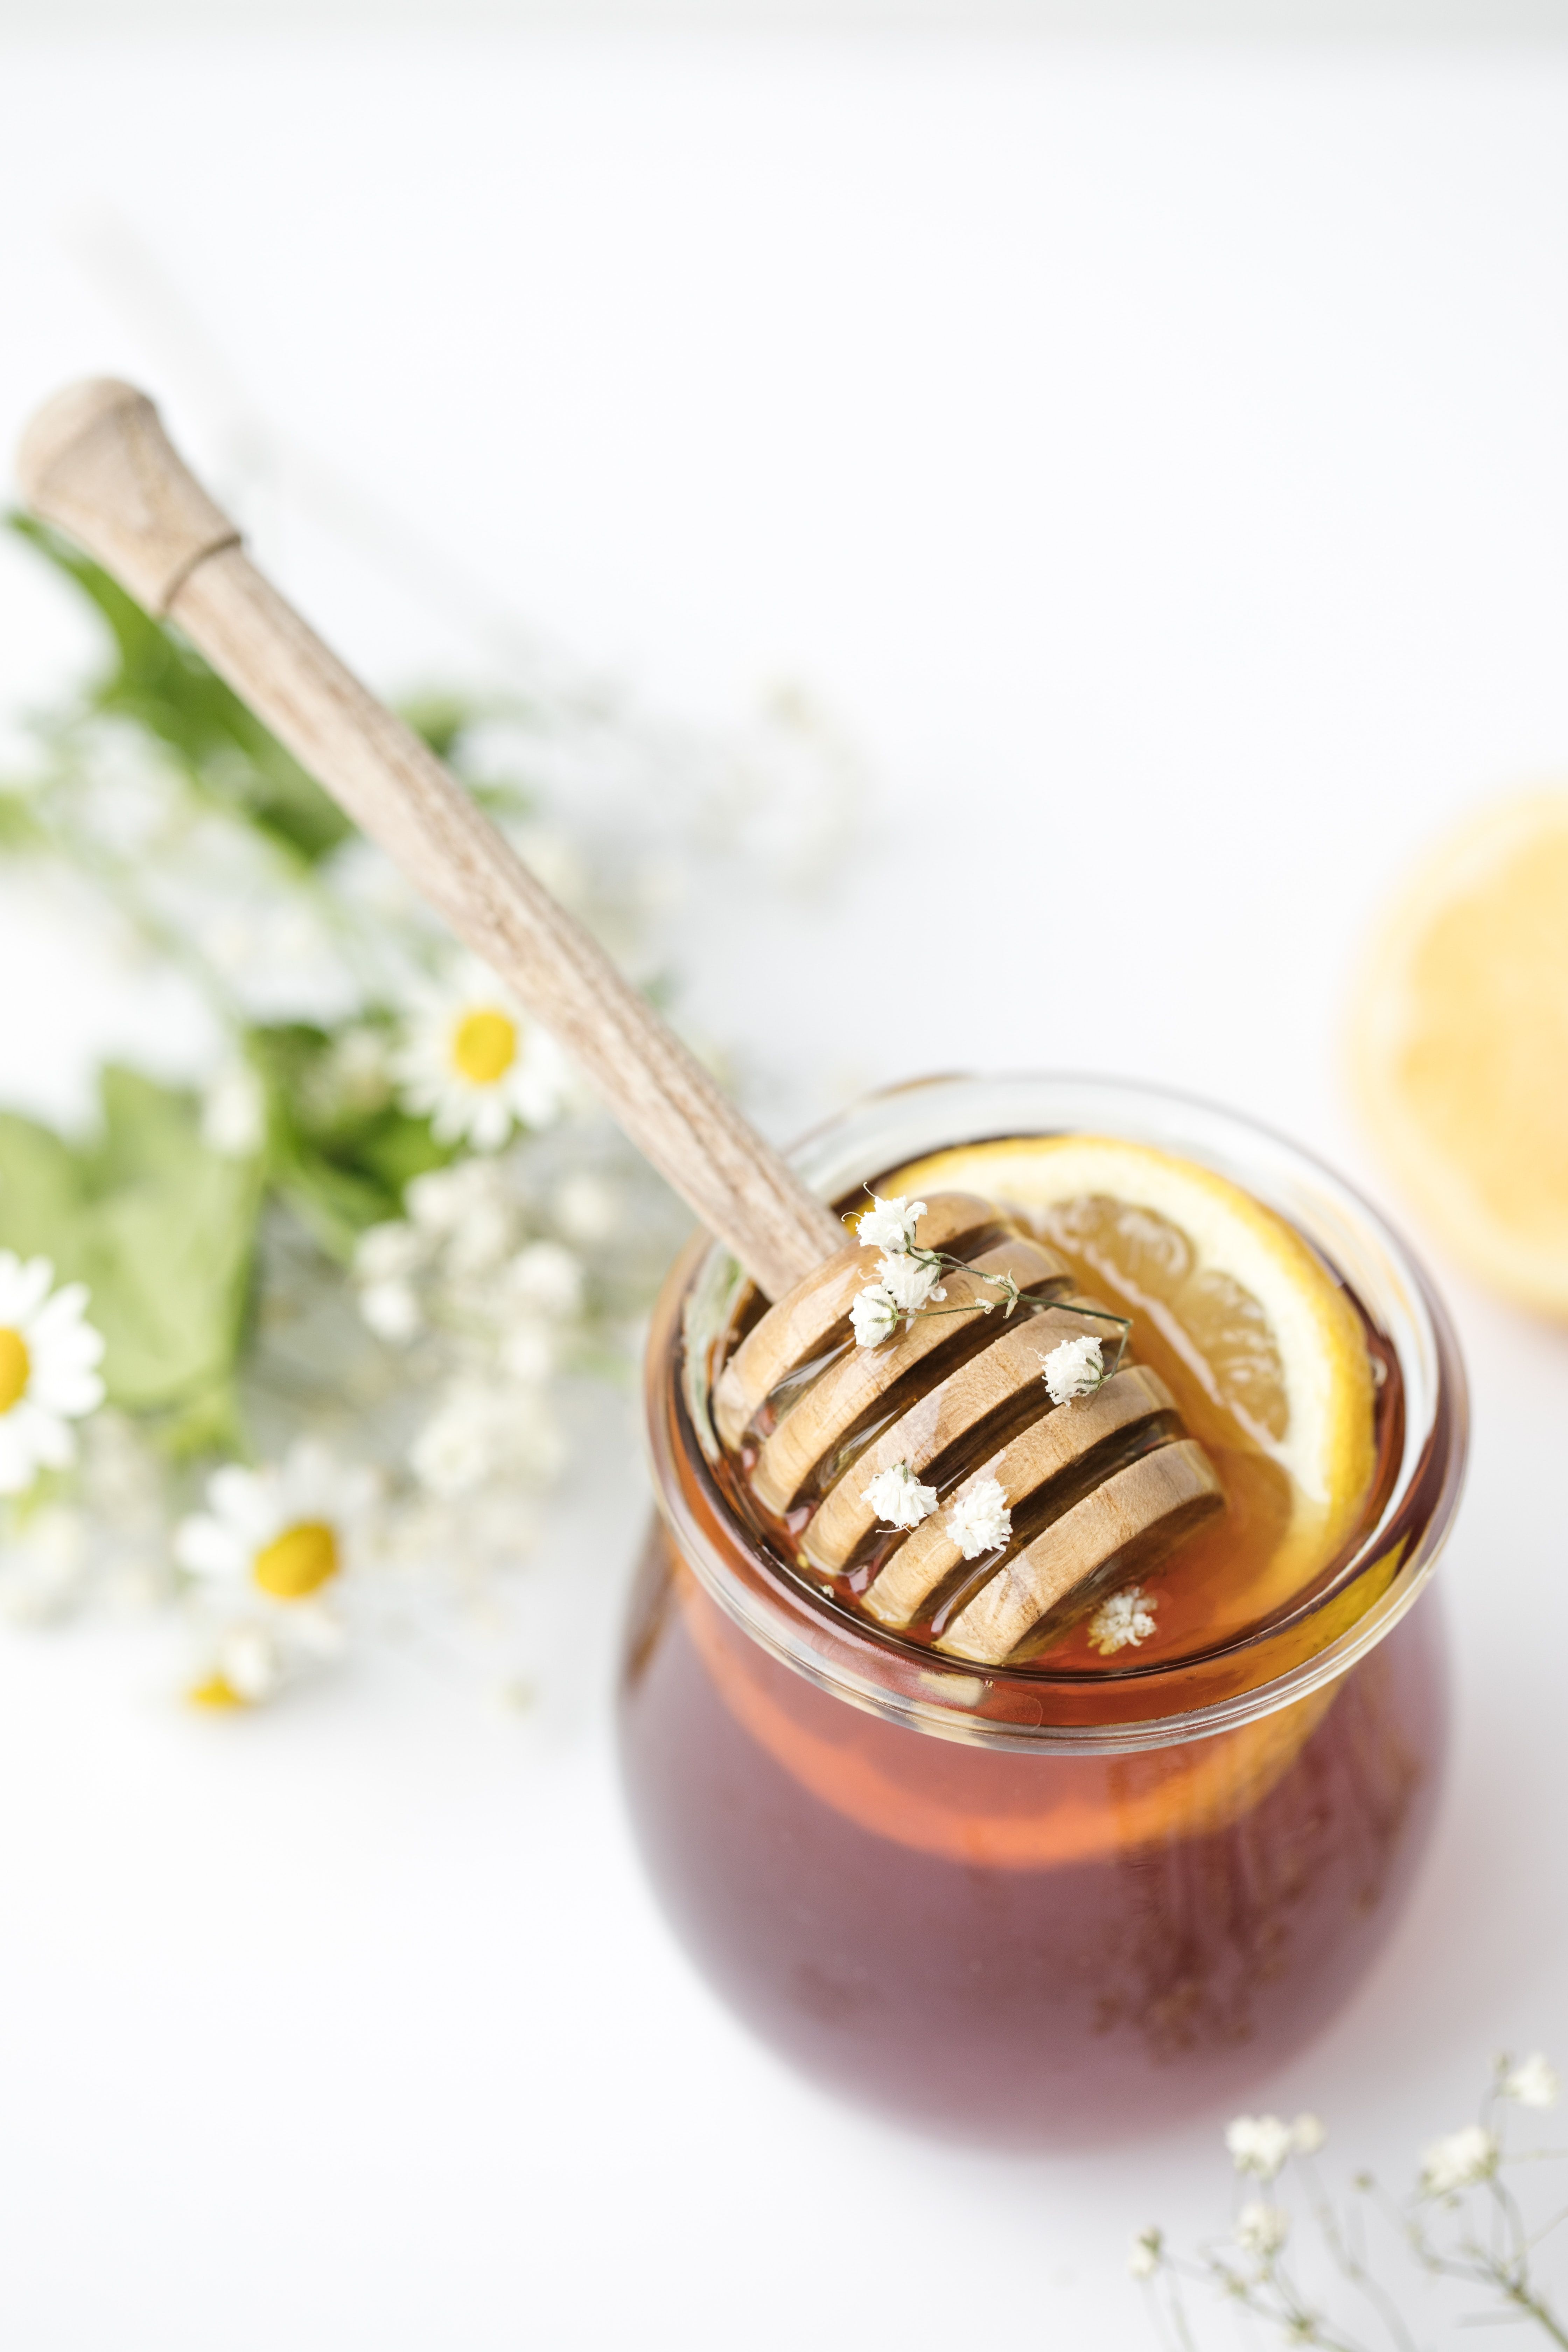 Manuka-Honig: Positive Wirkung bei Erkältung